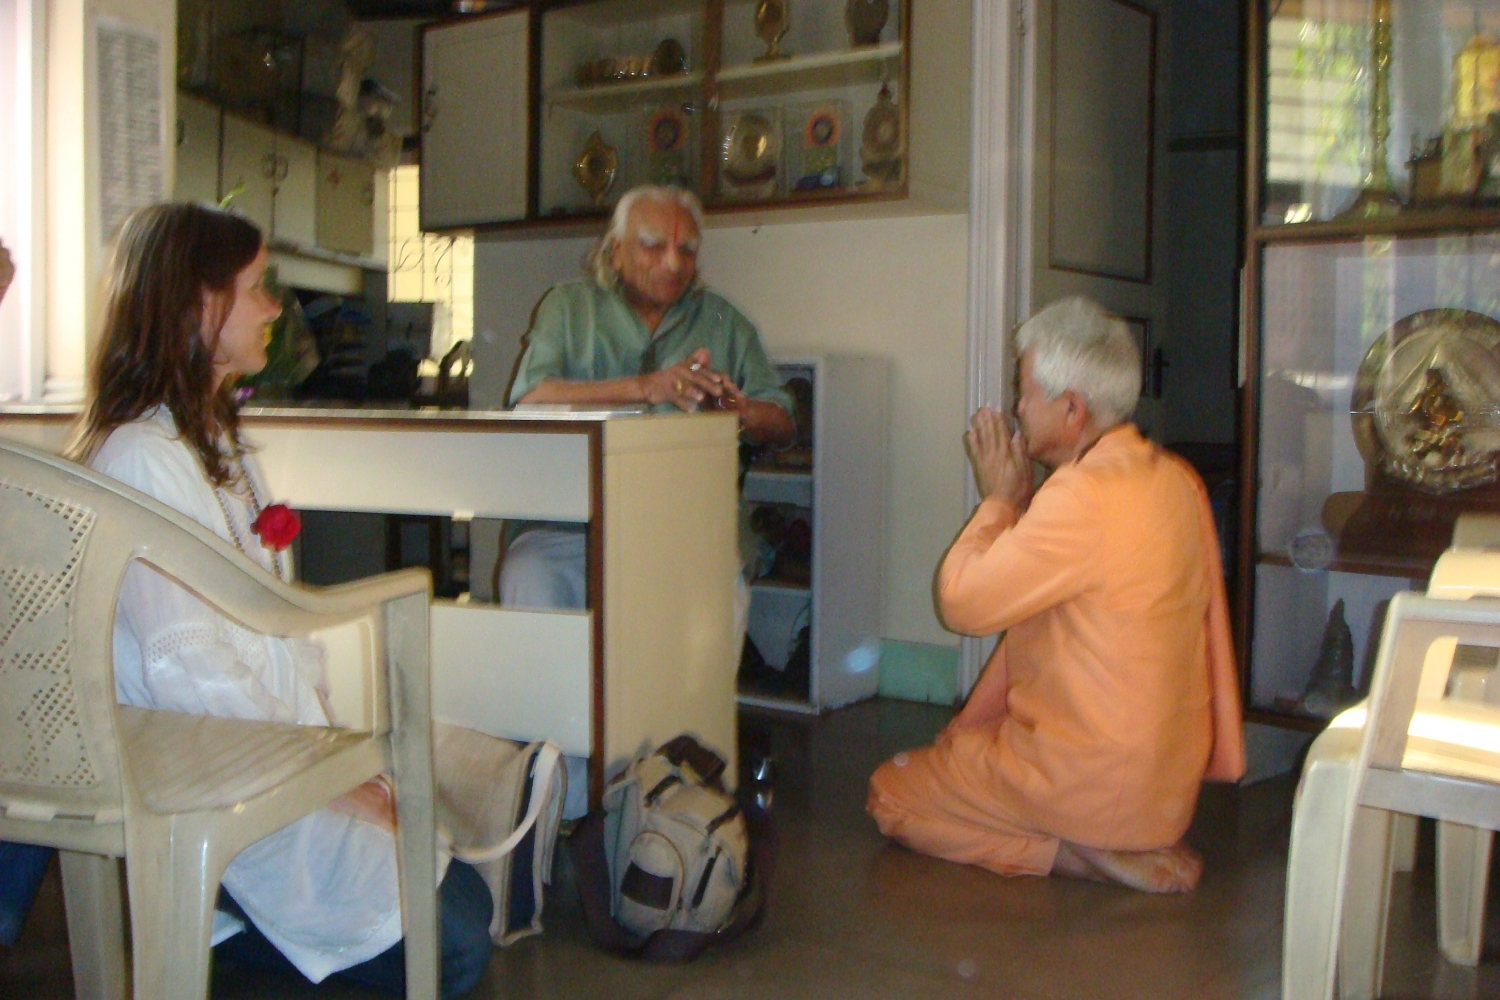 Encuento de H.H. Jagat Guru Amrta Súryánanda Mahá Rája con H.H. B.K.S. Iyengar Jí Mahá Rája  - Pune, India - 2009, diciembre